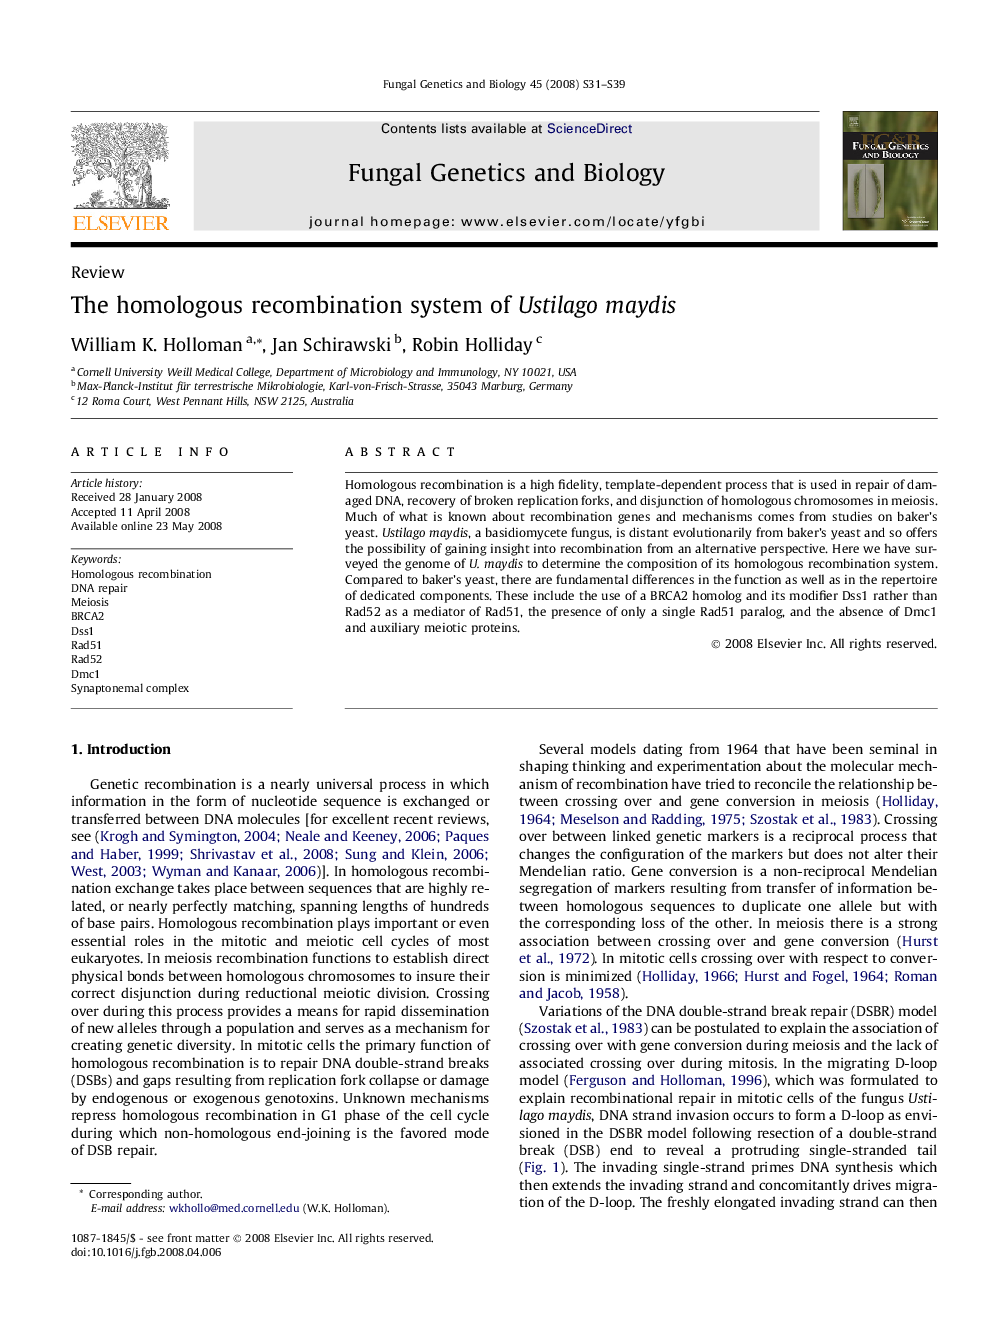 The homologous recombination system of Ustilago maydis